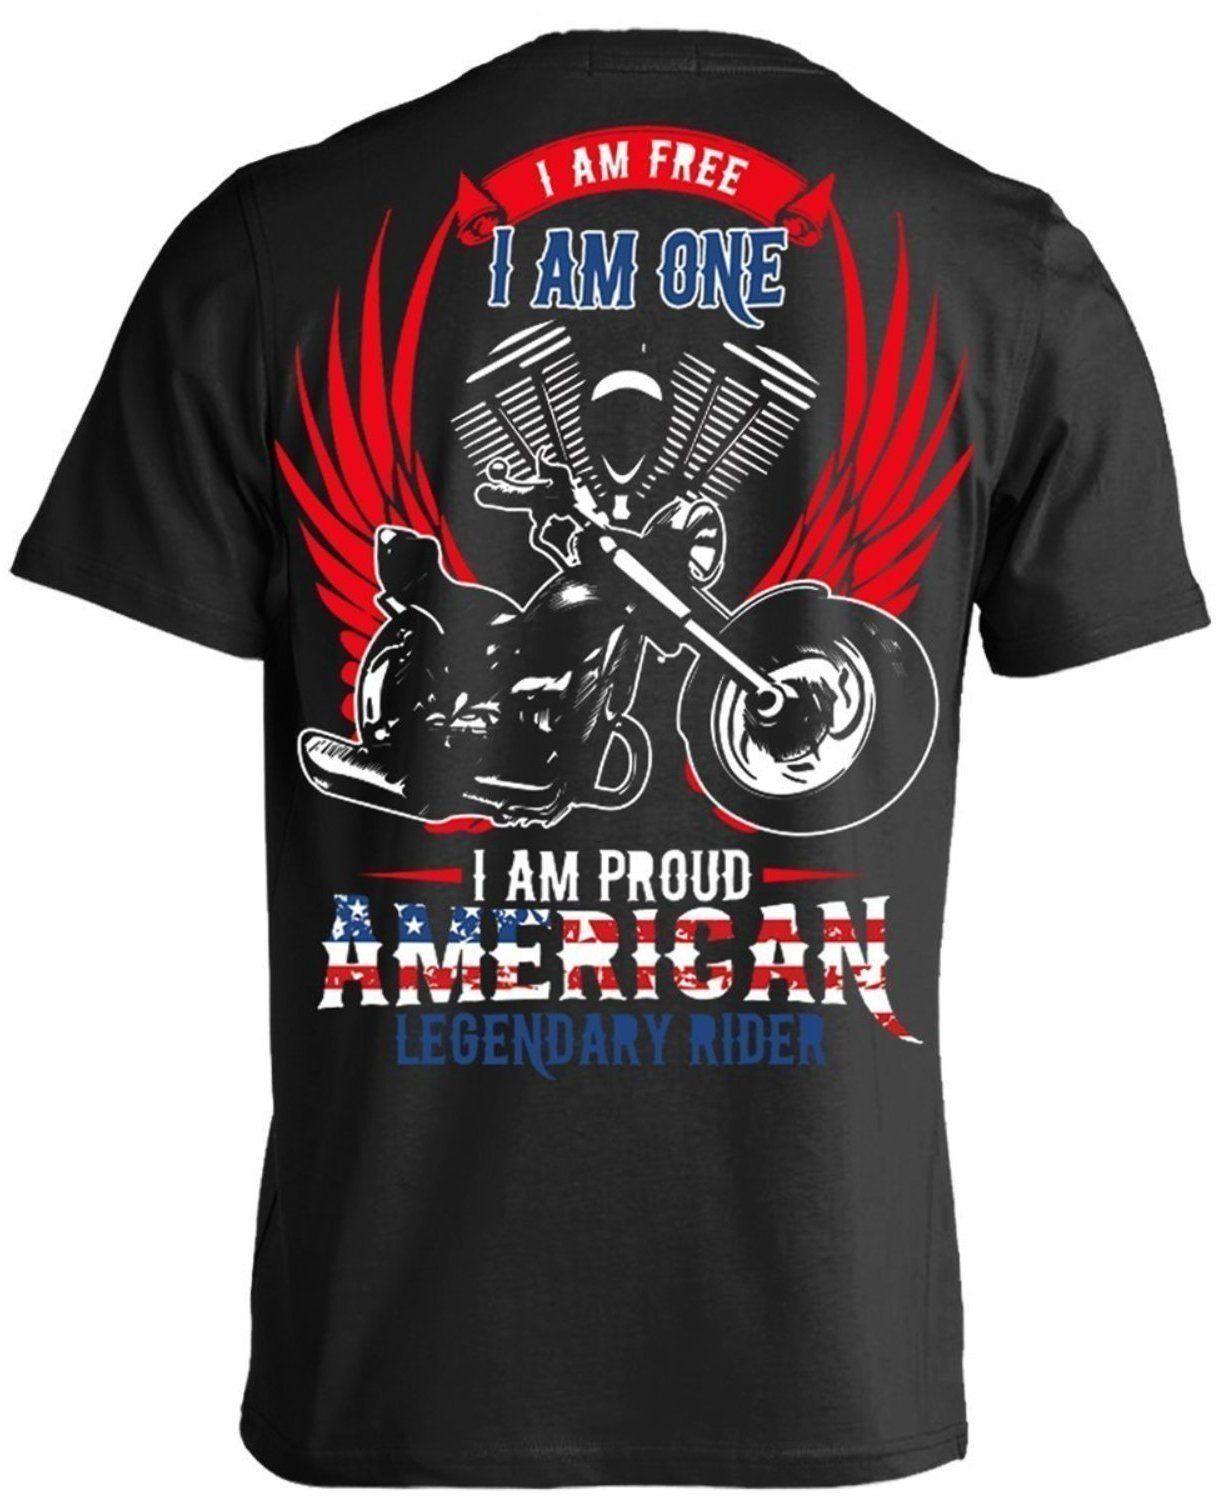 I am Proud American Legendary Rider T-Shirt - American Legend Rider